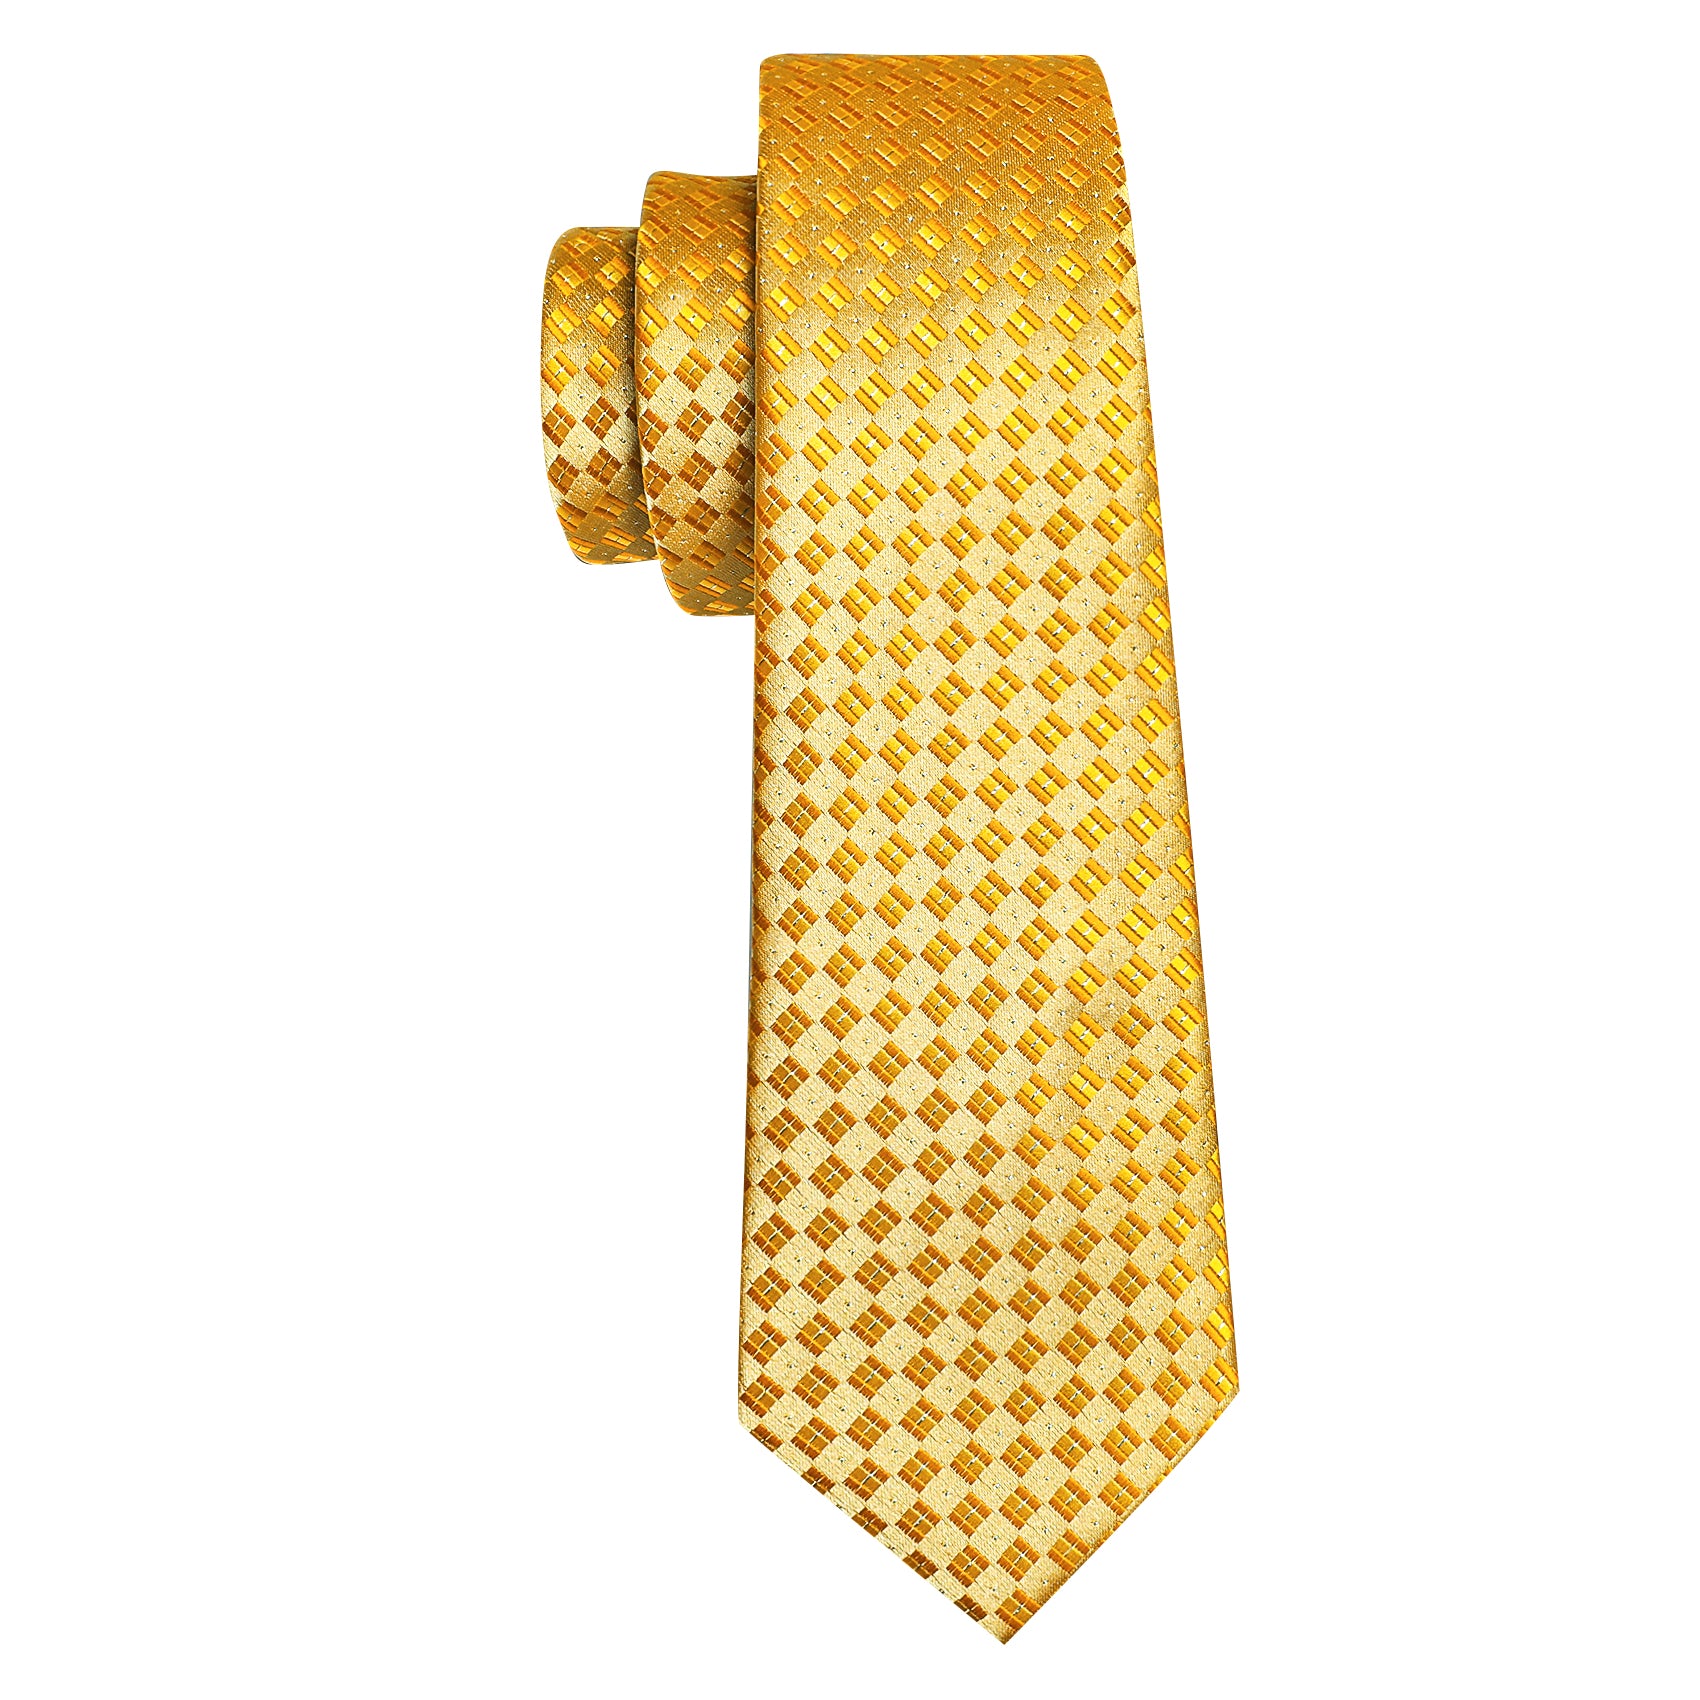 Novetly Gold Plaid Silk Tie Pocket Square Cufflinks Set